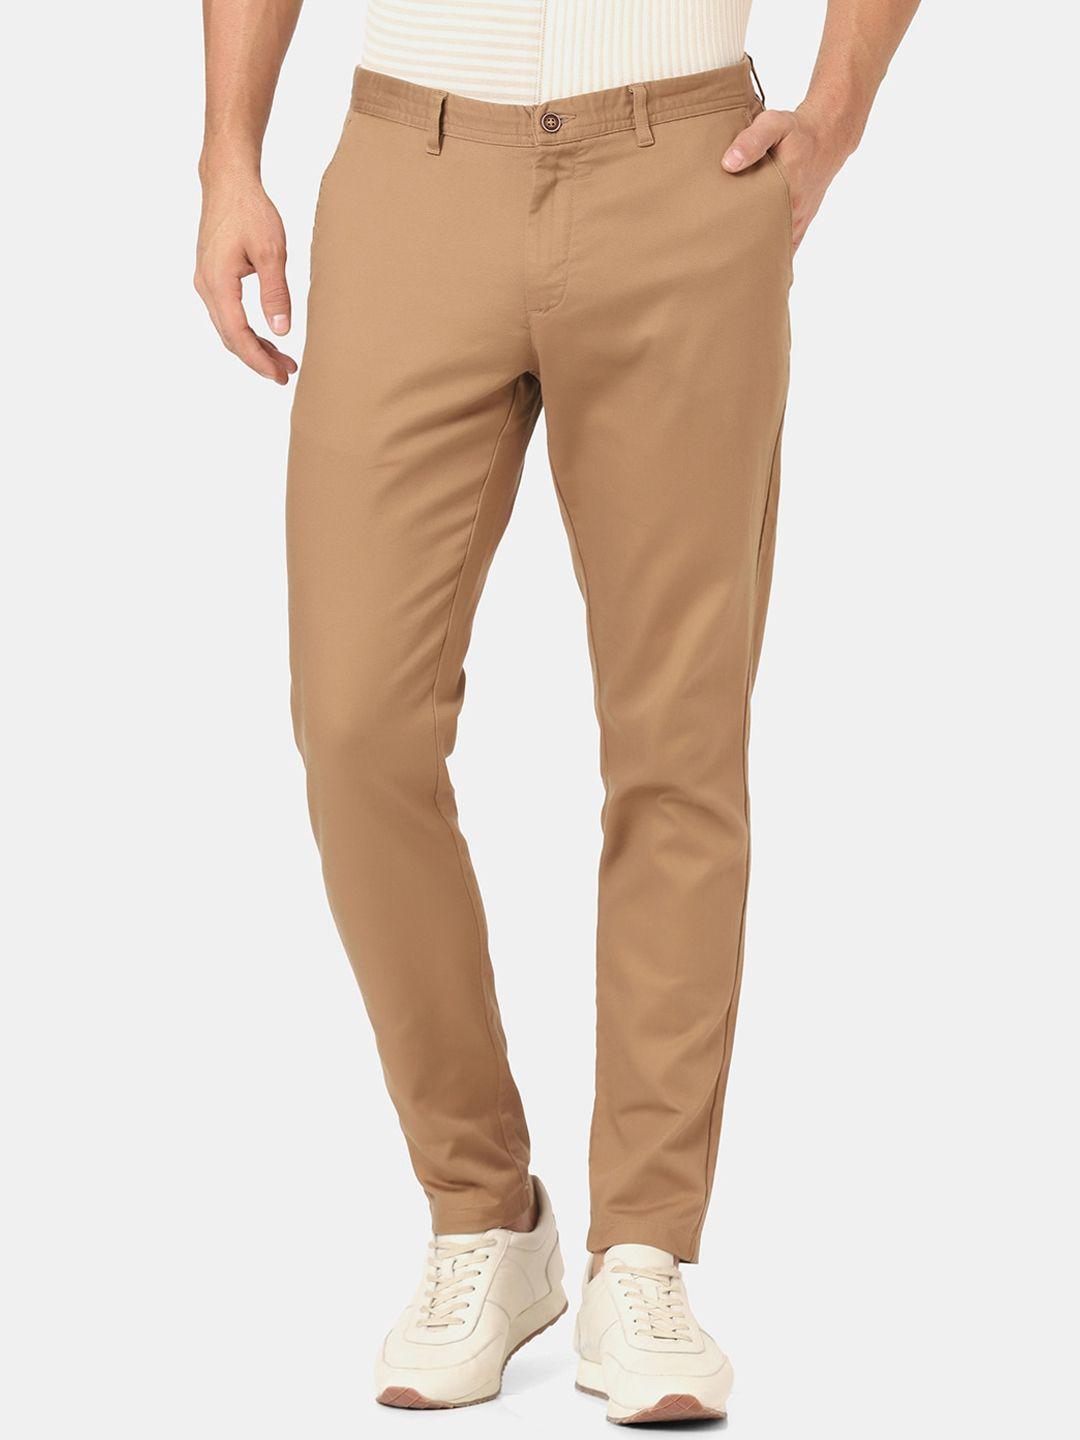 blackberrys-men-brown-skinny-fit-low-rise-chinos-trousers